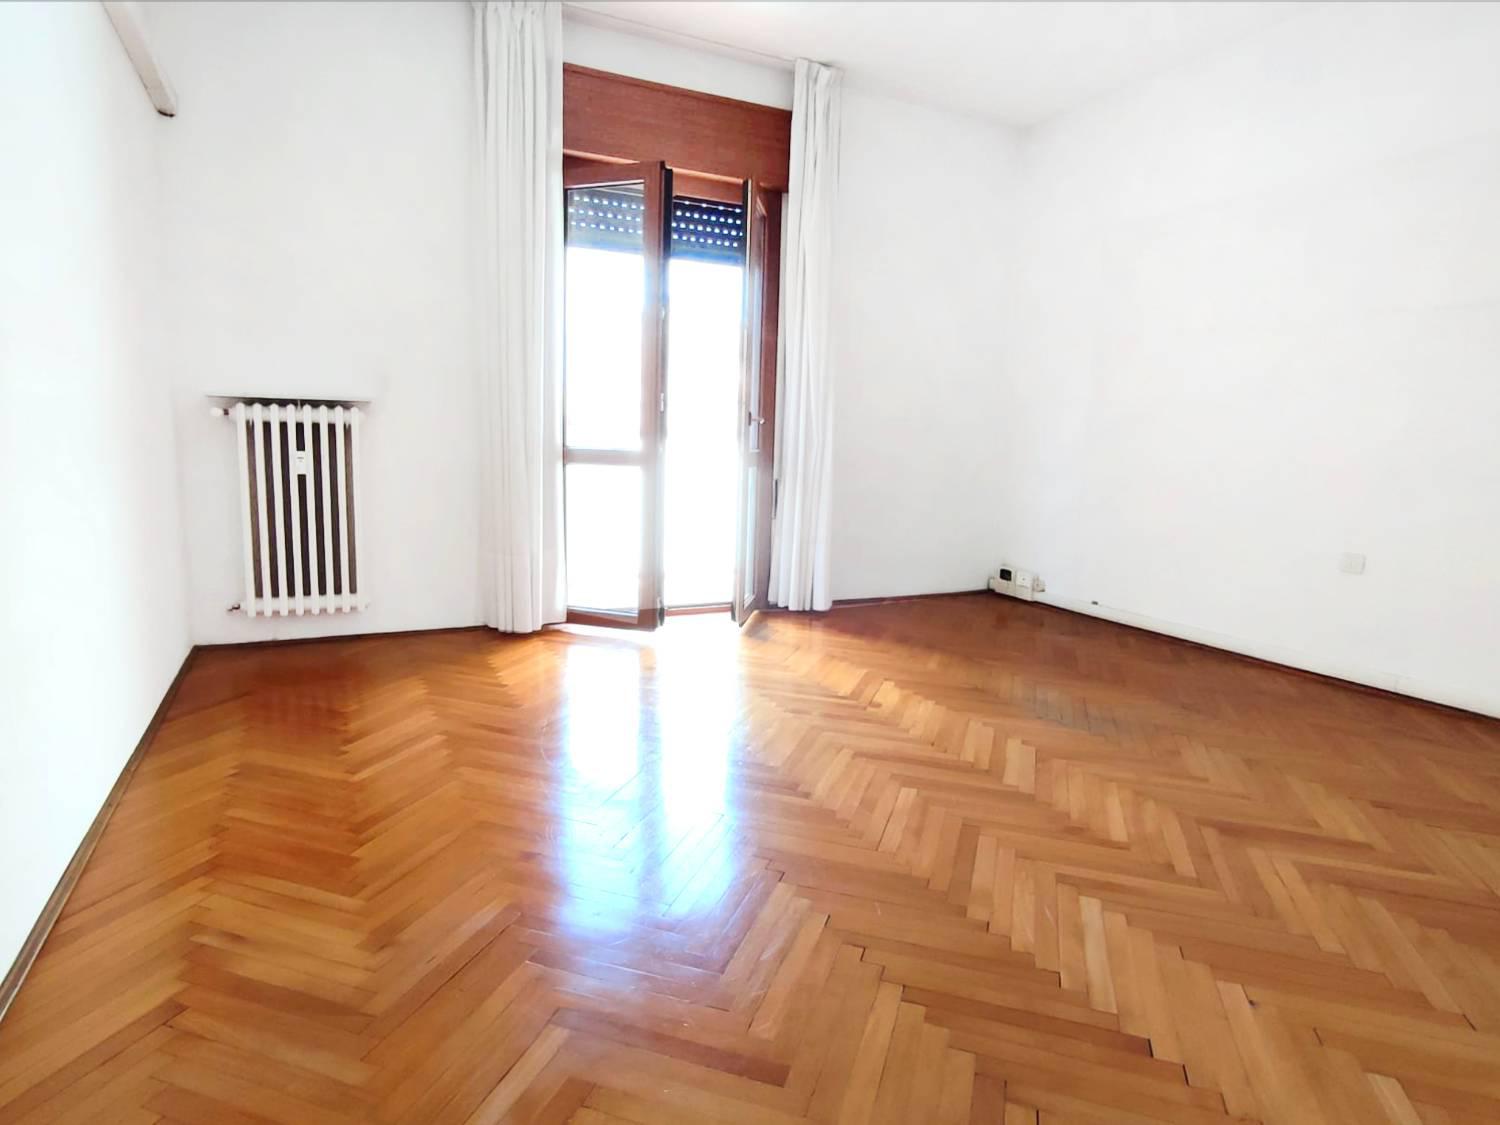 Foto 4 di 10 - Appartamento in vendita a Venezia